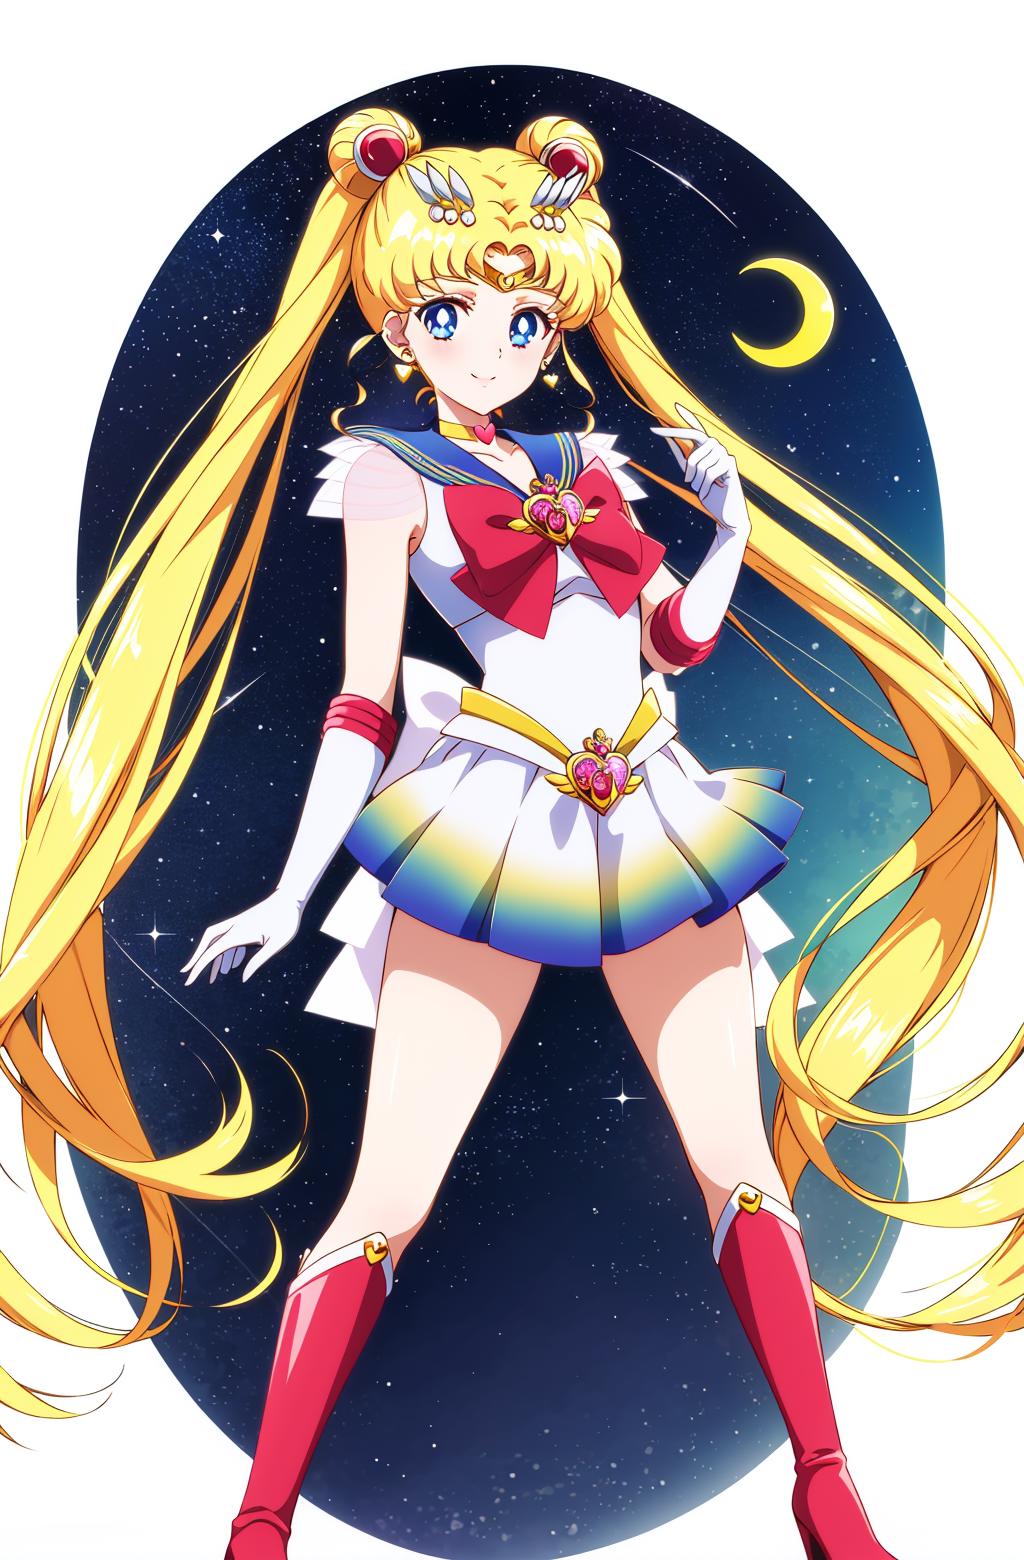 Super Sailor Moon LoRa image by lostpast